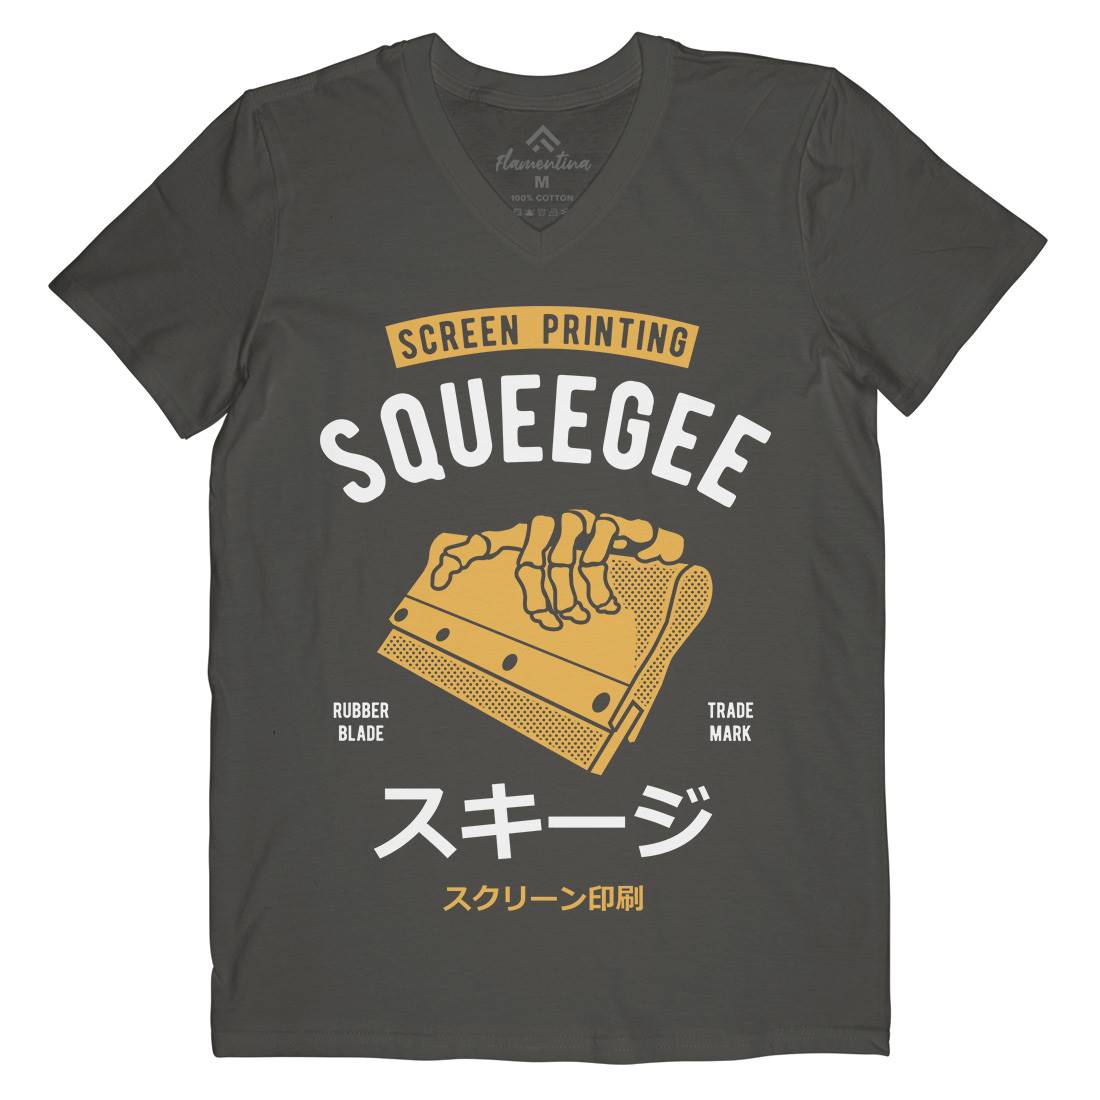 Squeegee Social Club Mens V-Neck T-Shirt Work A282